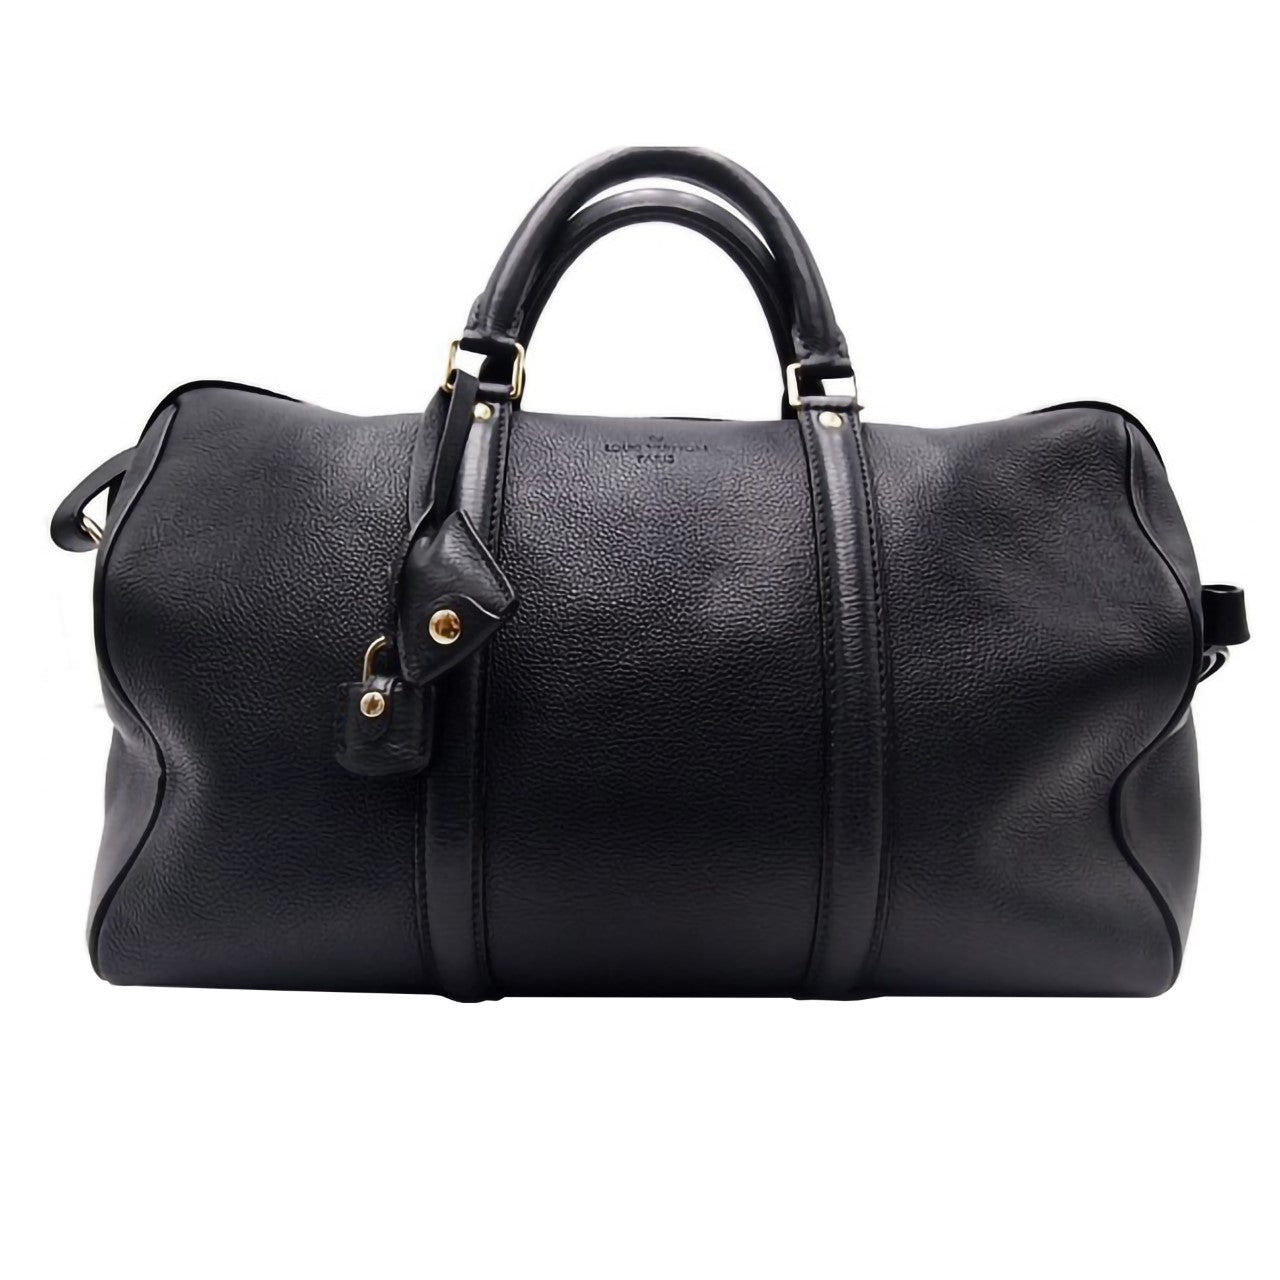 Sofia Coppola leather handbag